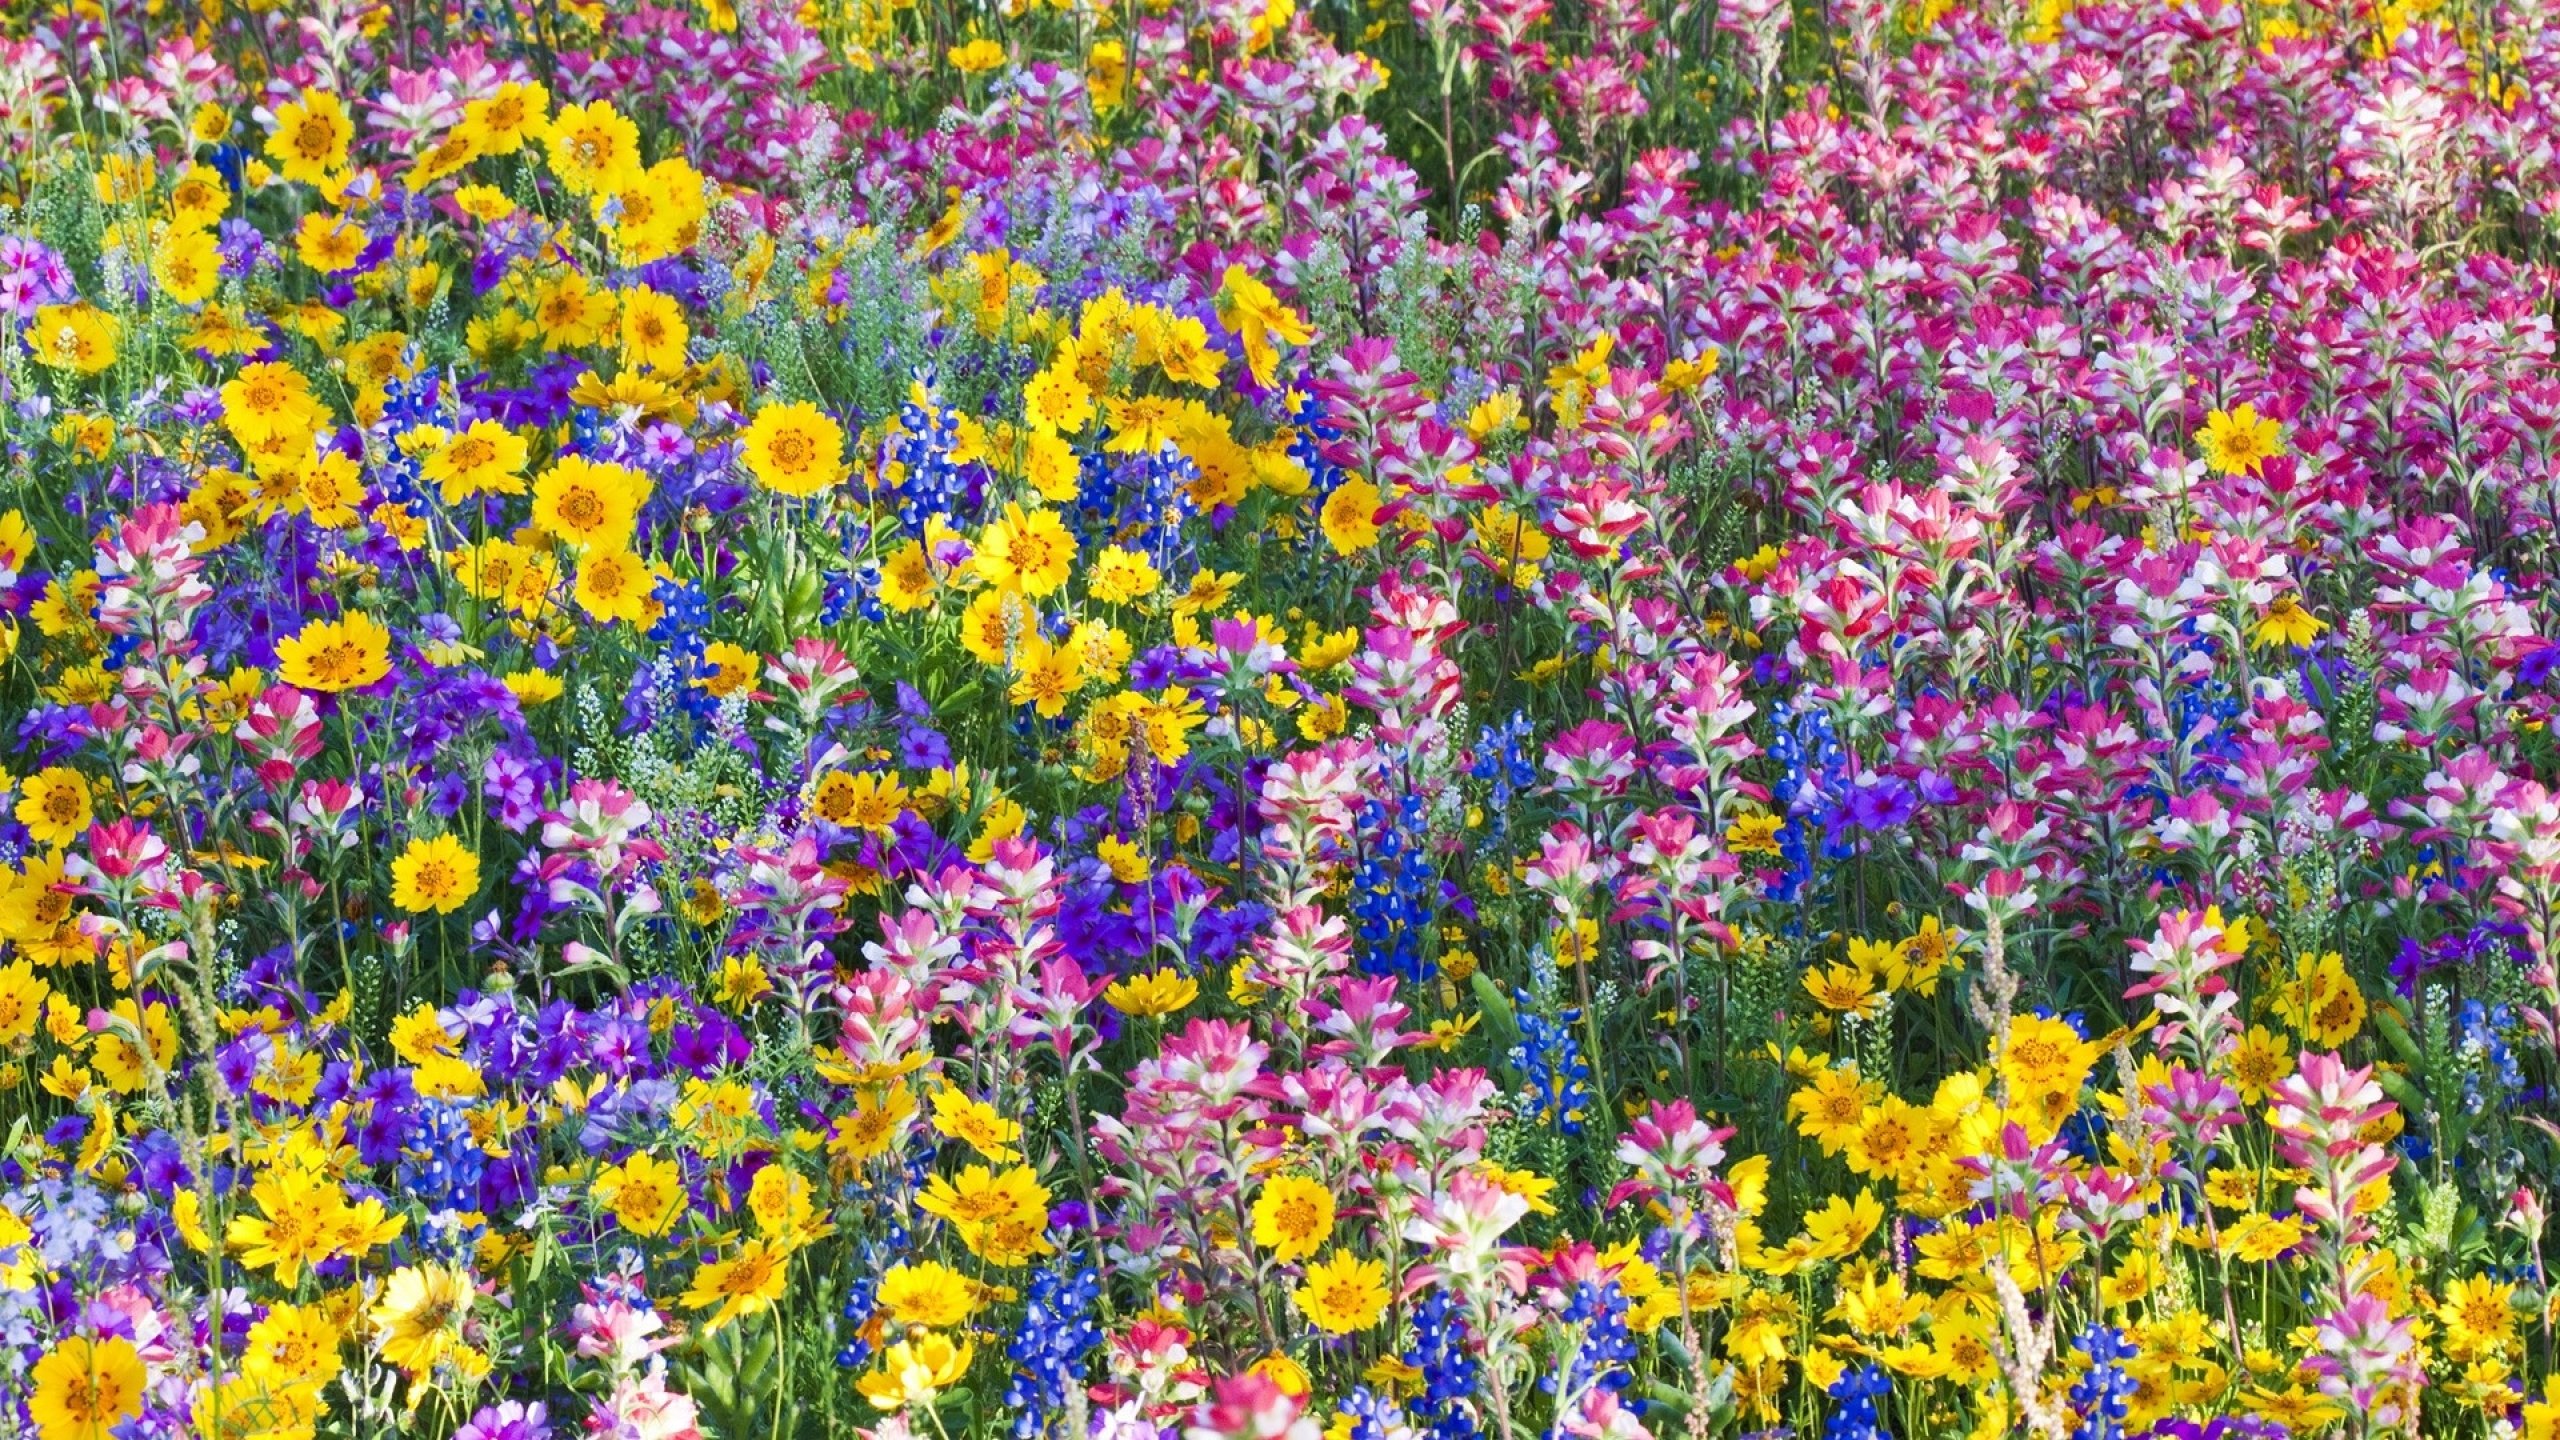  texas wildflowers bluebells 1920x1080 wallpaper Wallpaper HD download 2560x1440